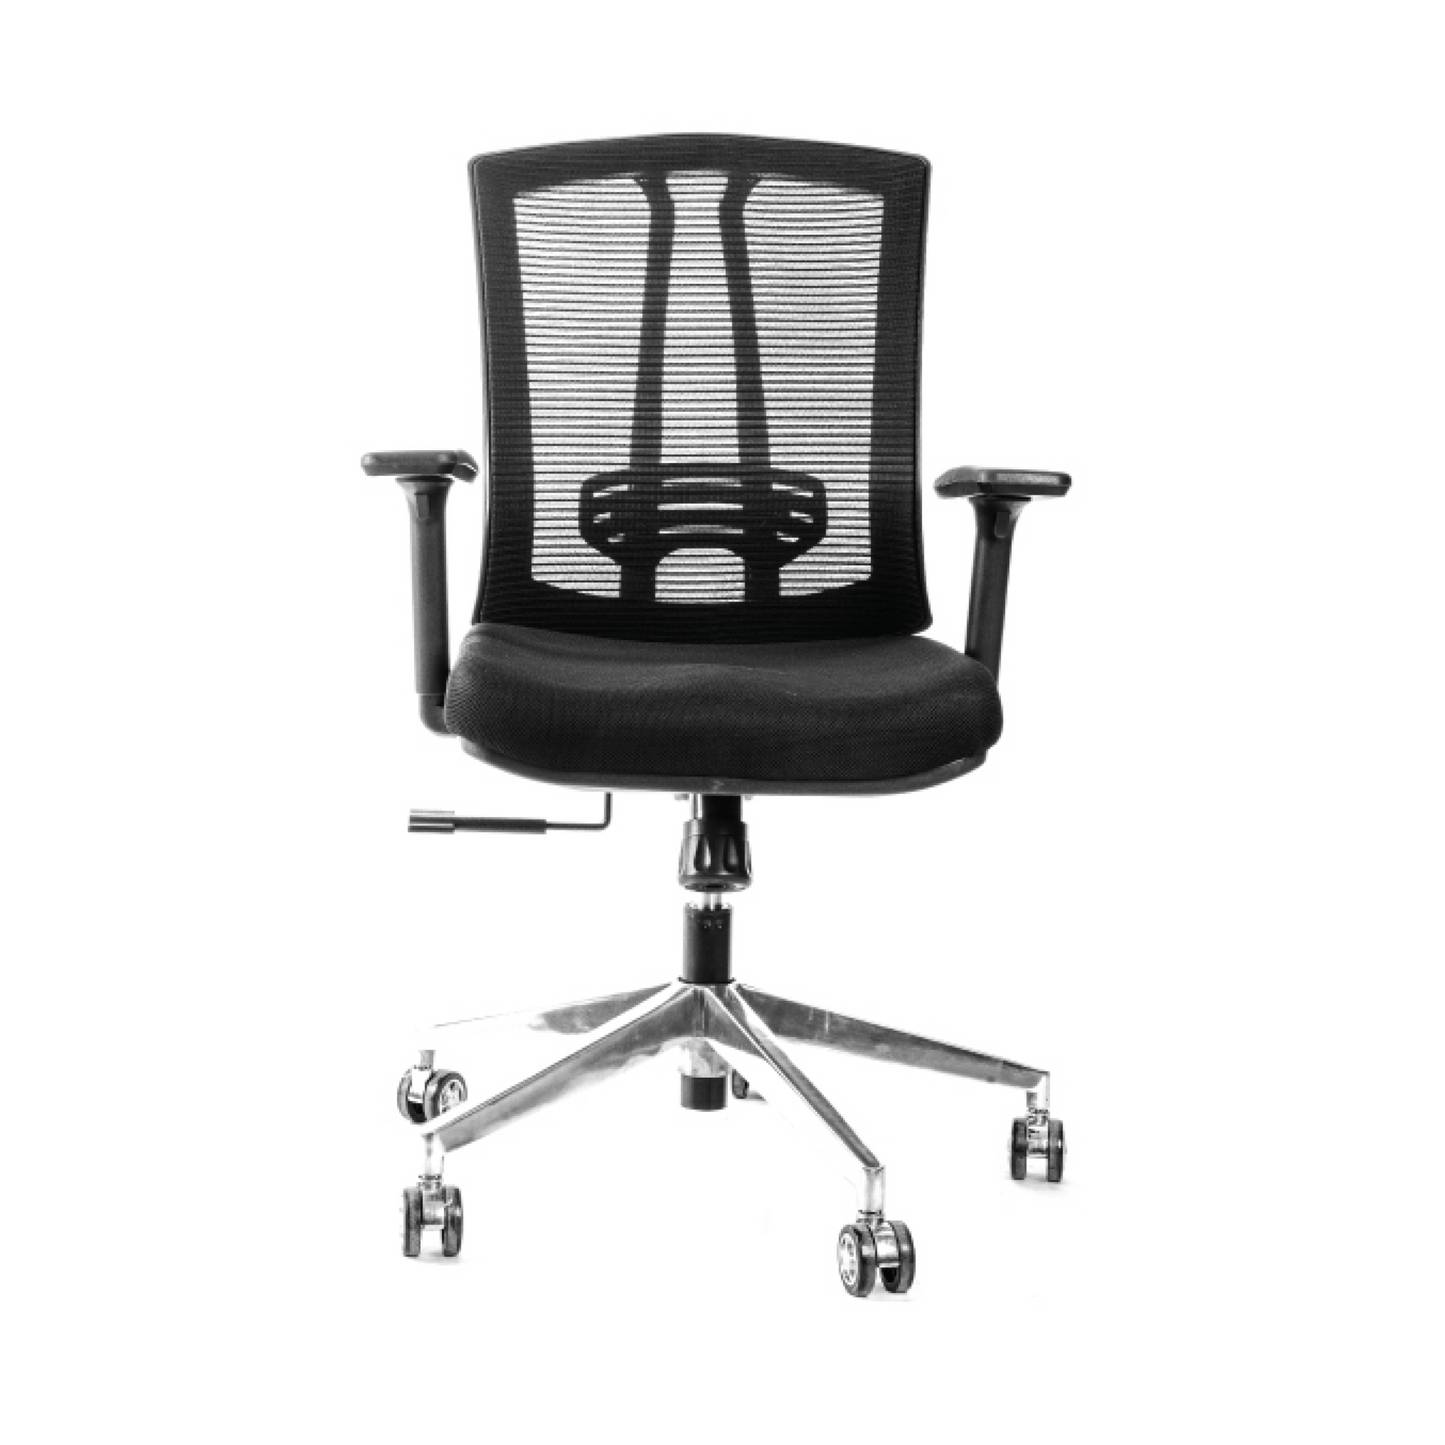 Best Office Chair - Model No. KP-ZEBRA MB DX